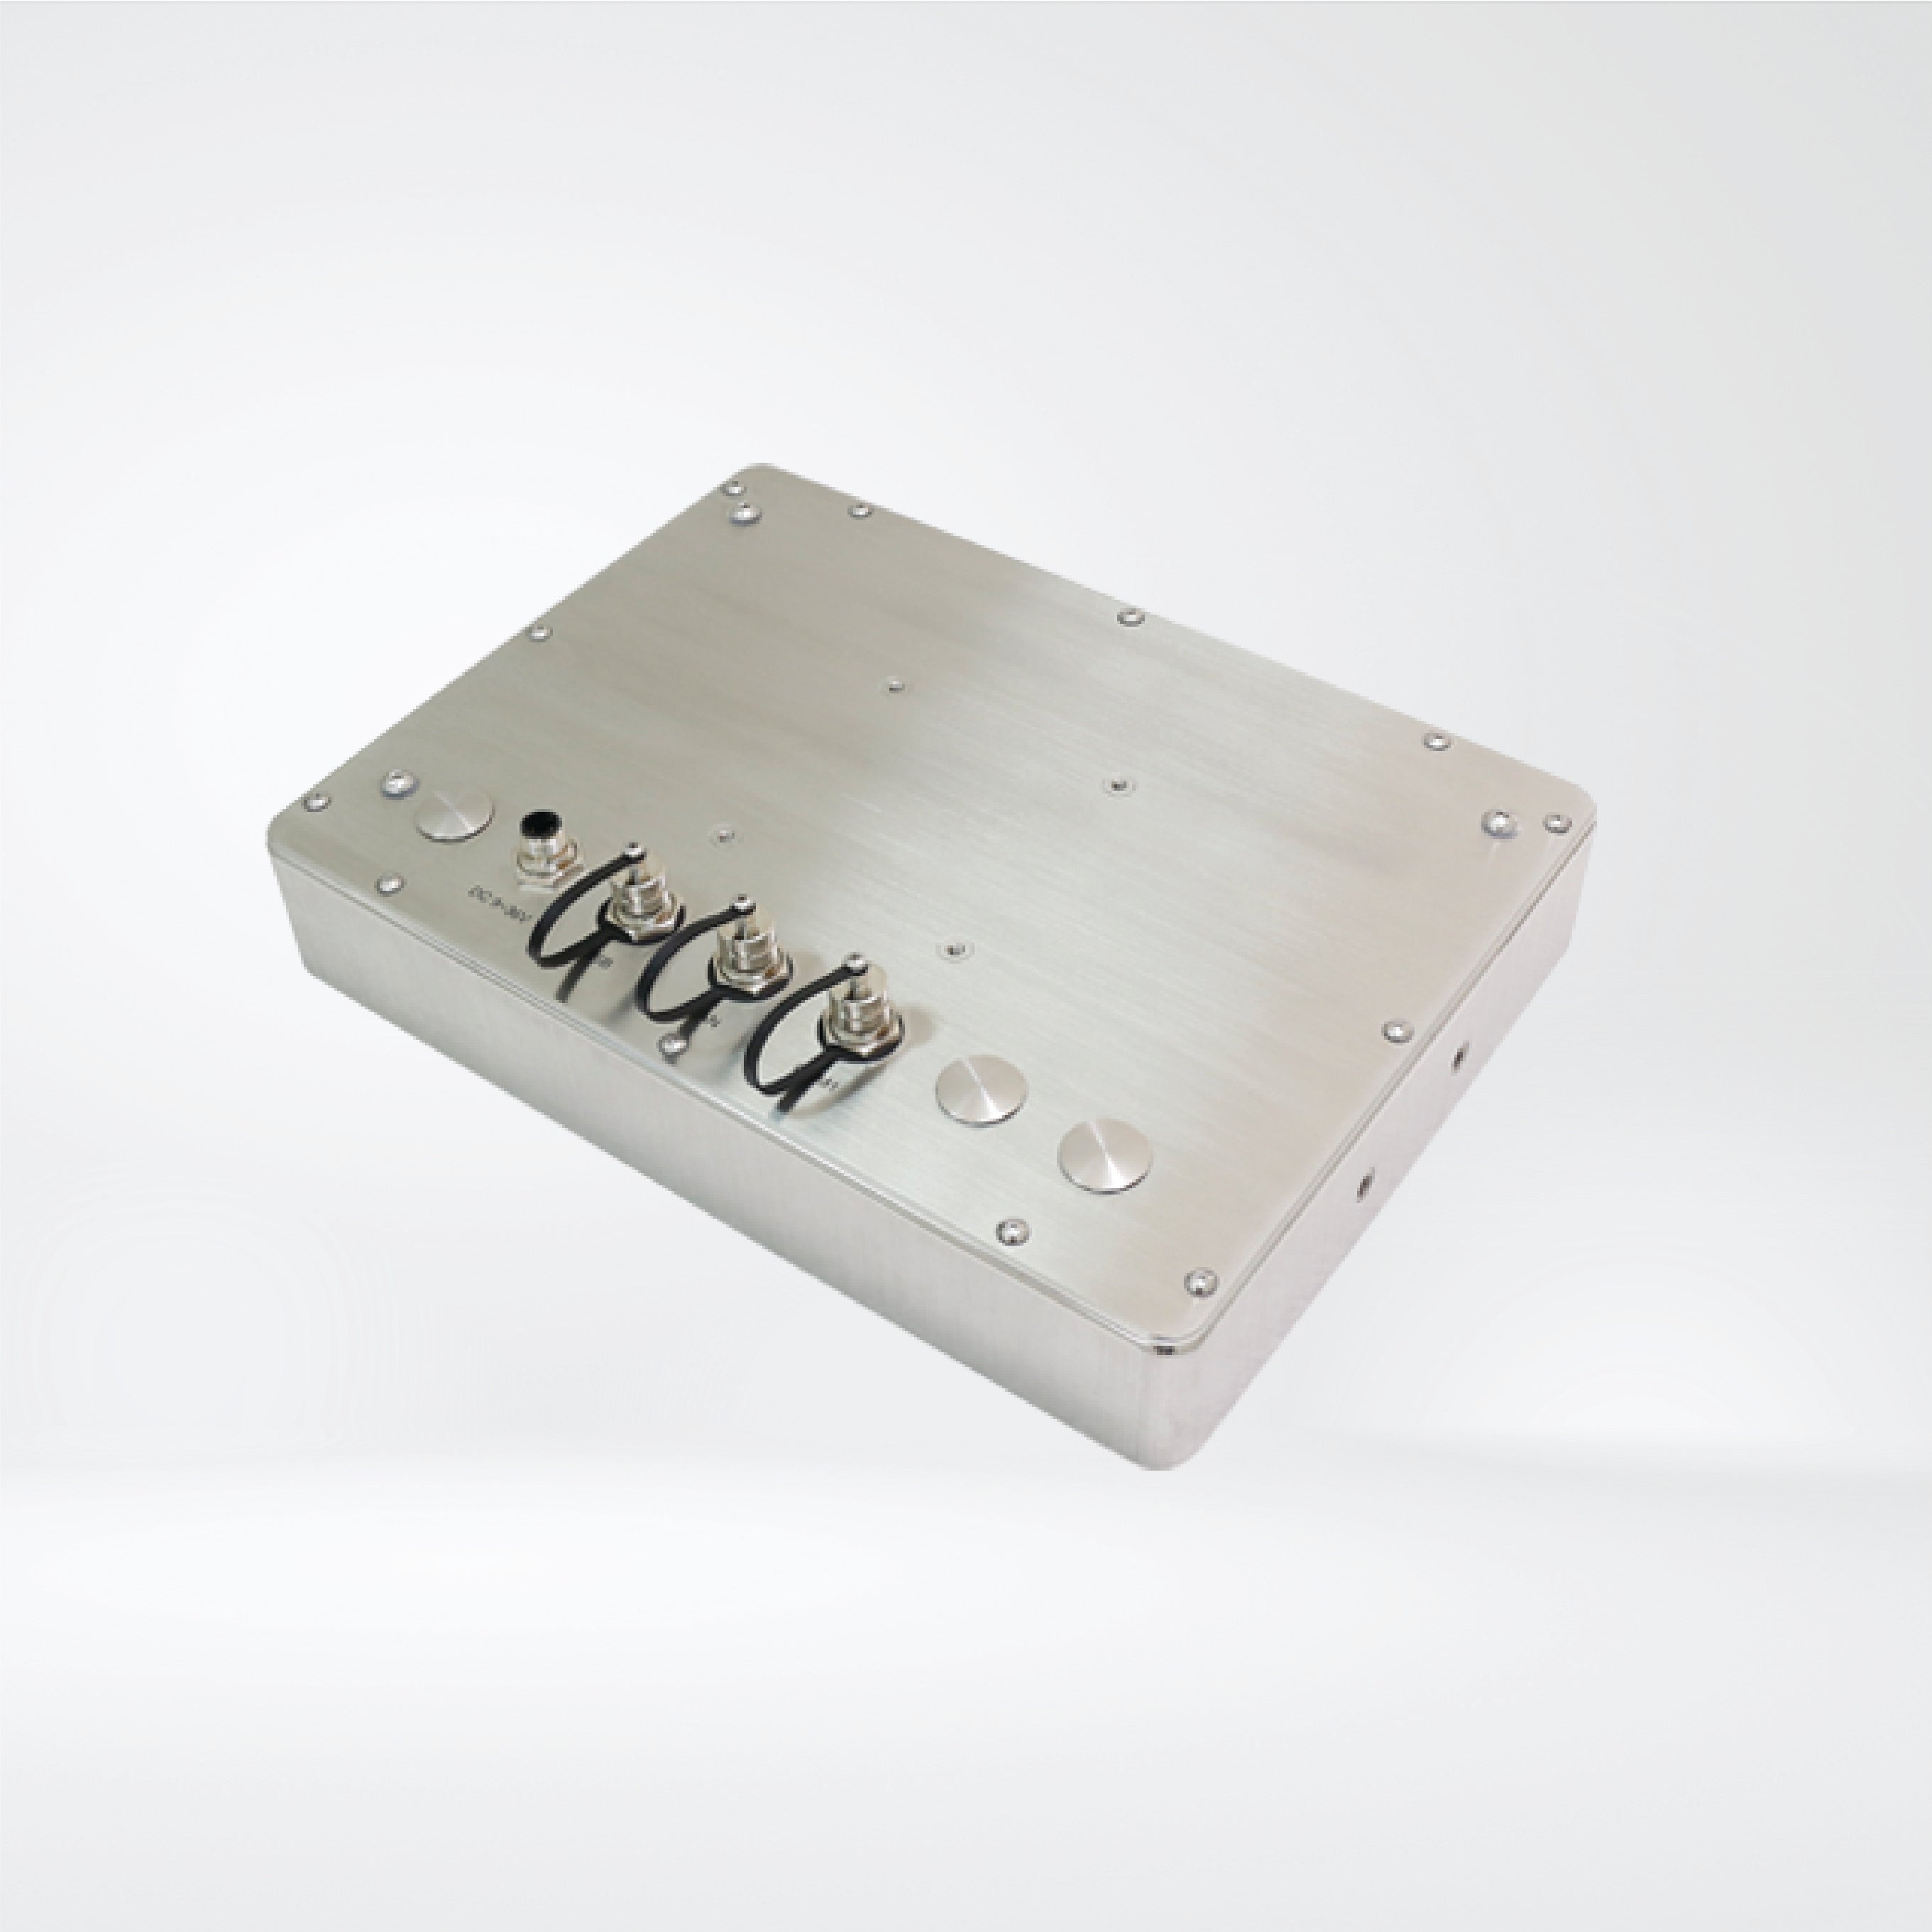 ViTAM-810B 10.1" IP66/IP69K Stainless Steel Panel PC